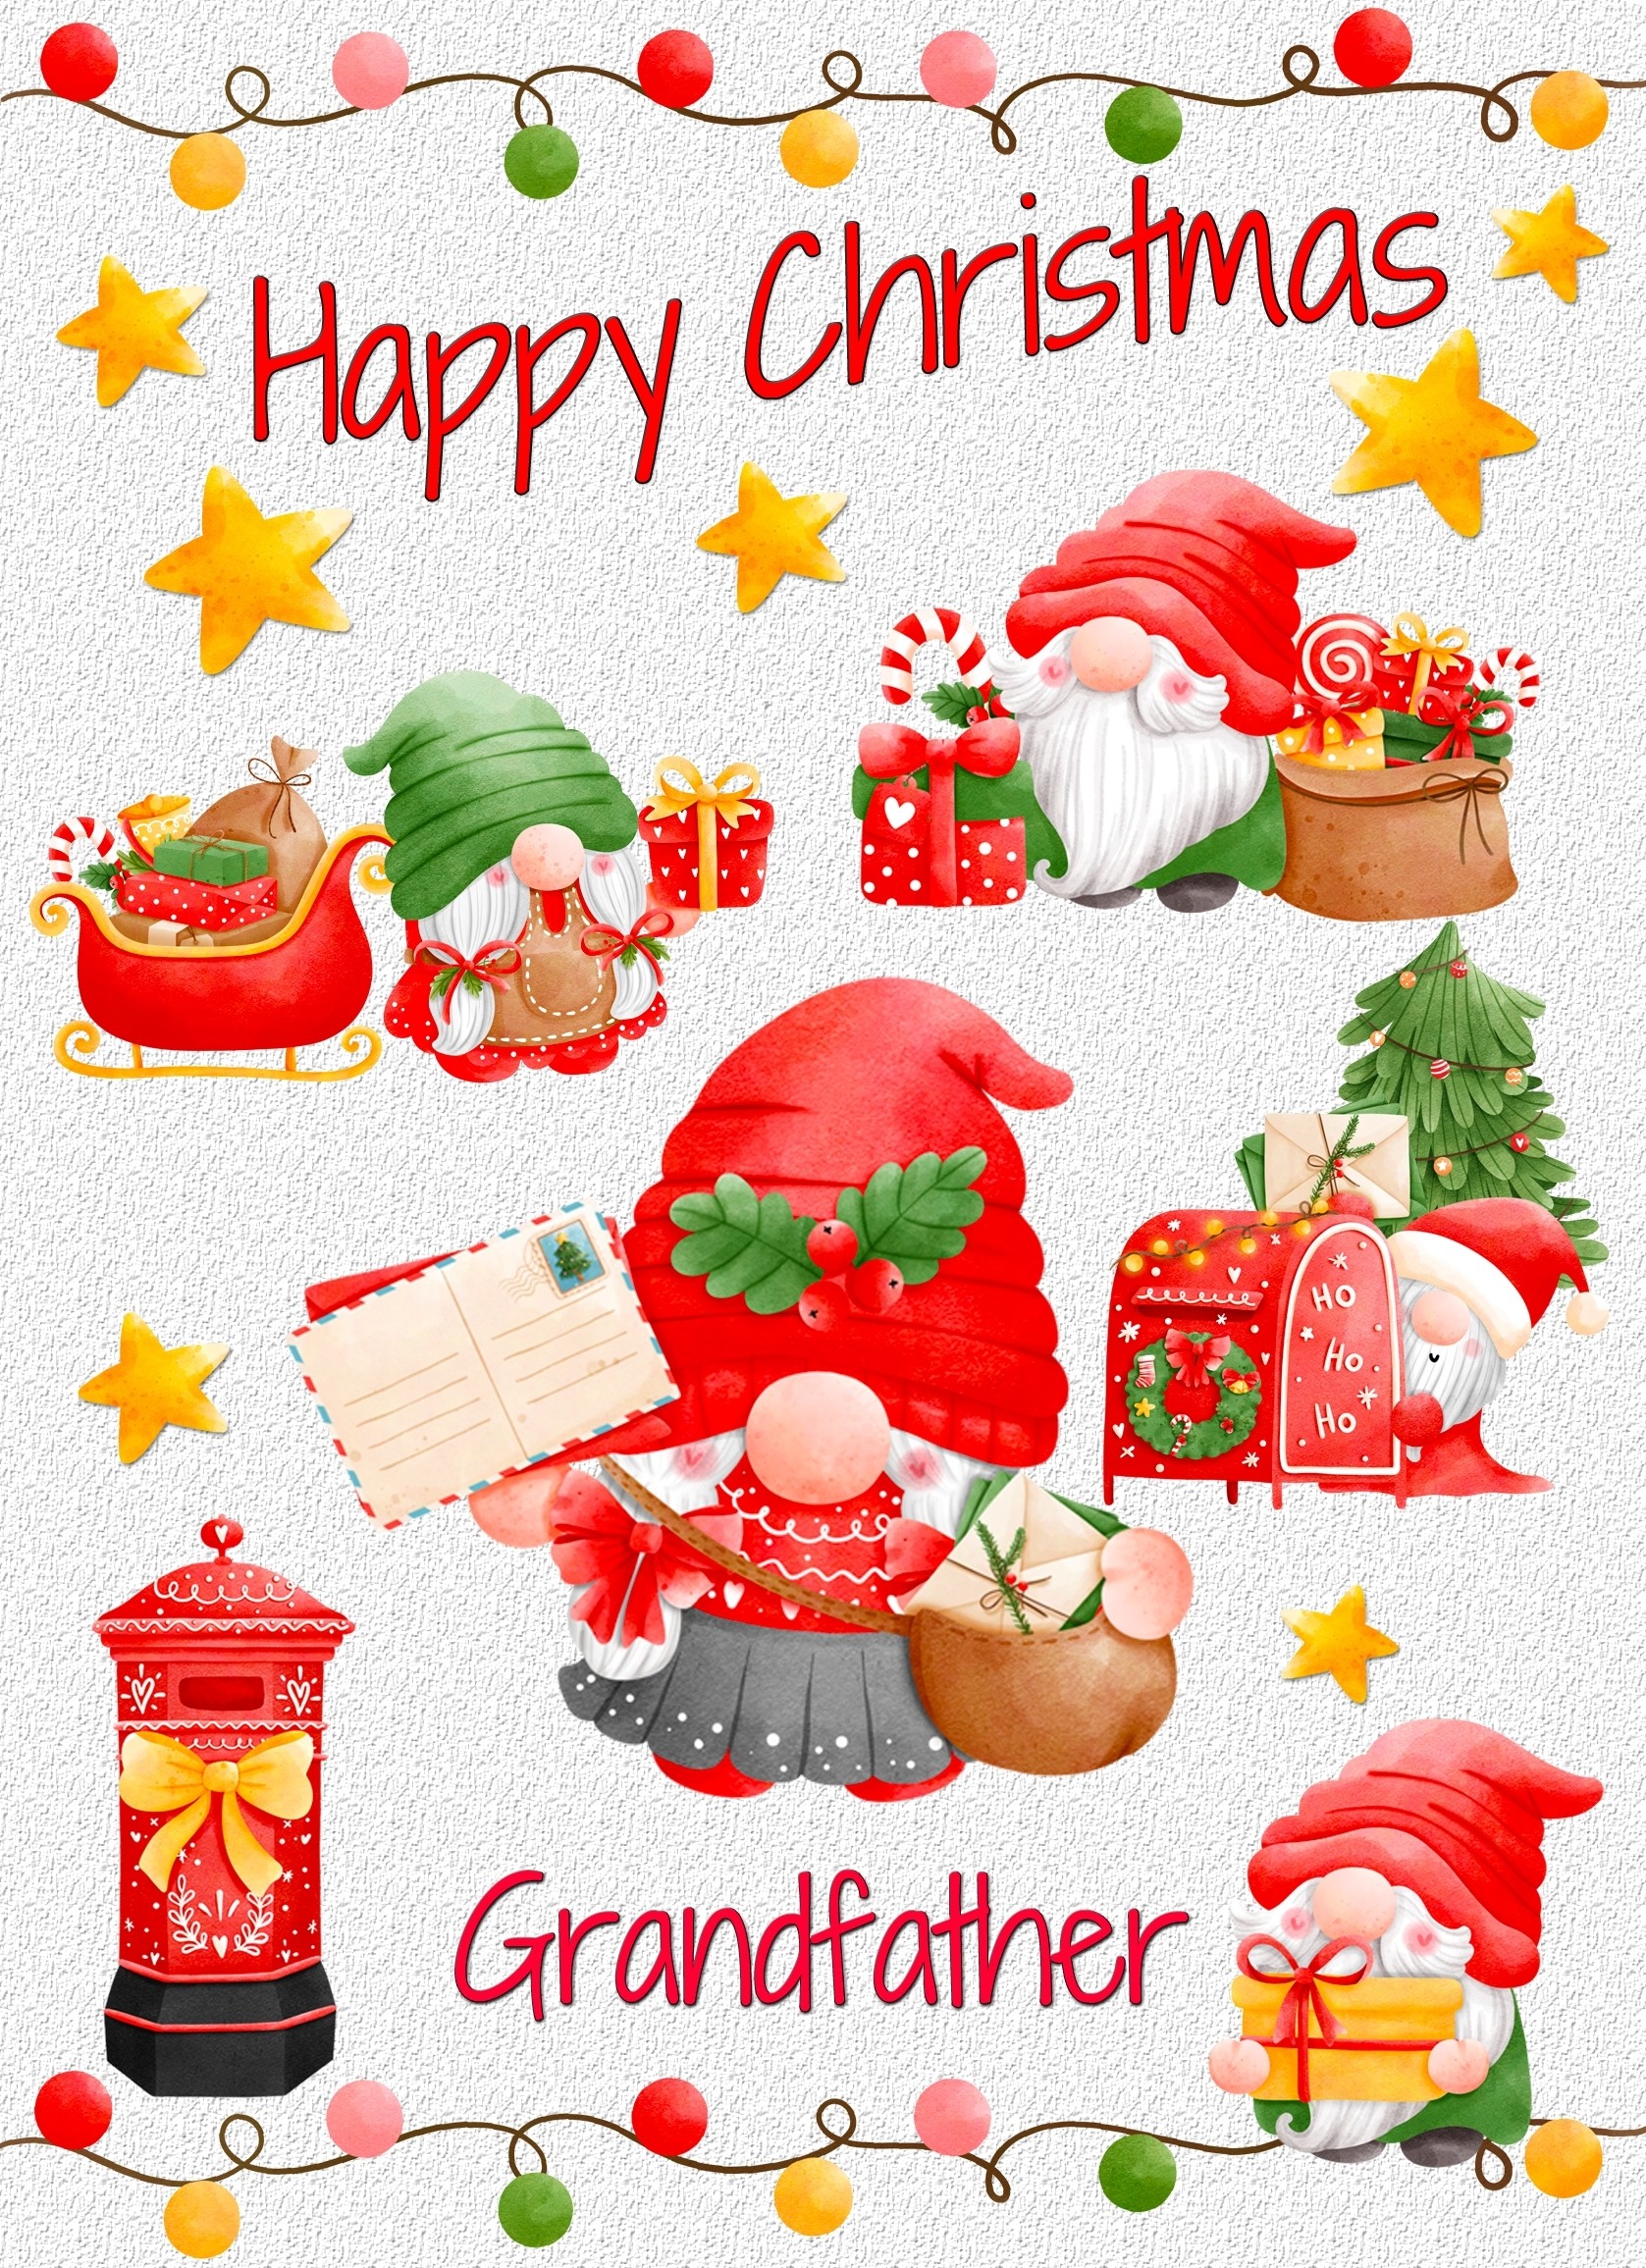 Christmas Card For Grandfather (Gnome, White)